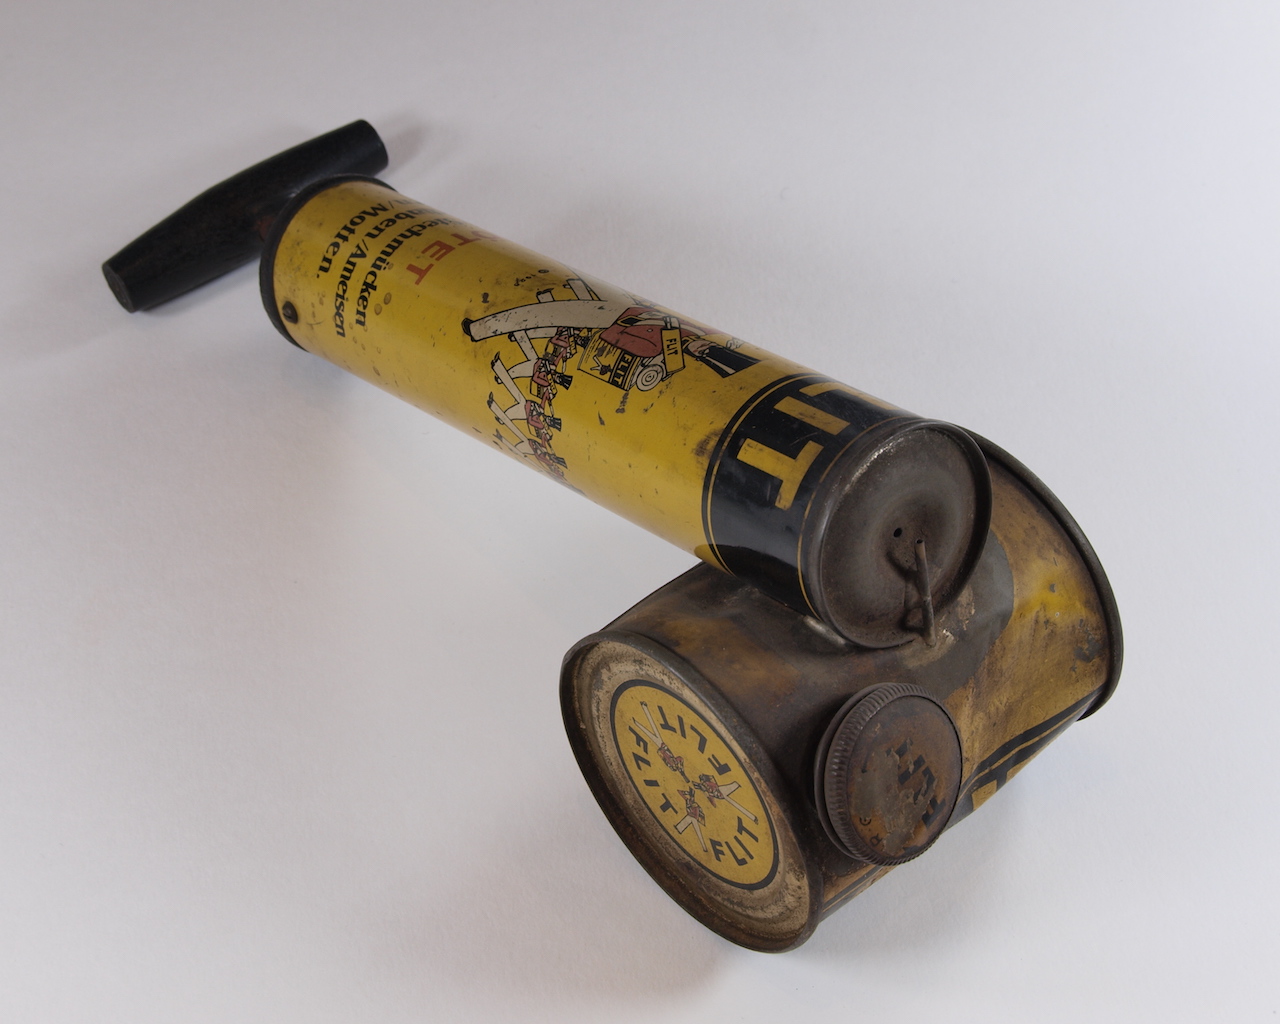 Old Flit sprayer